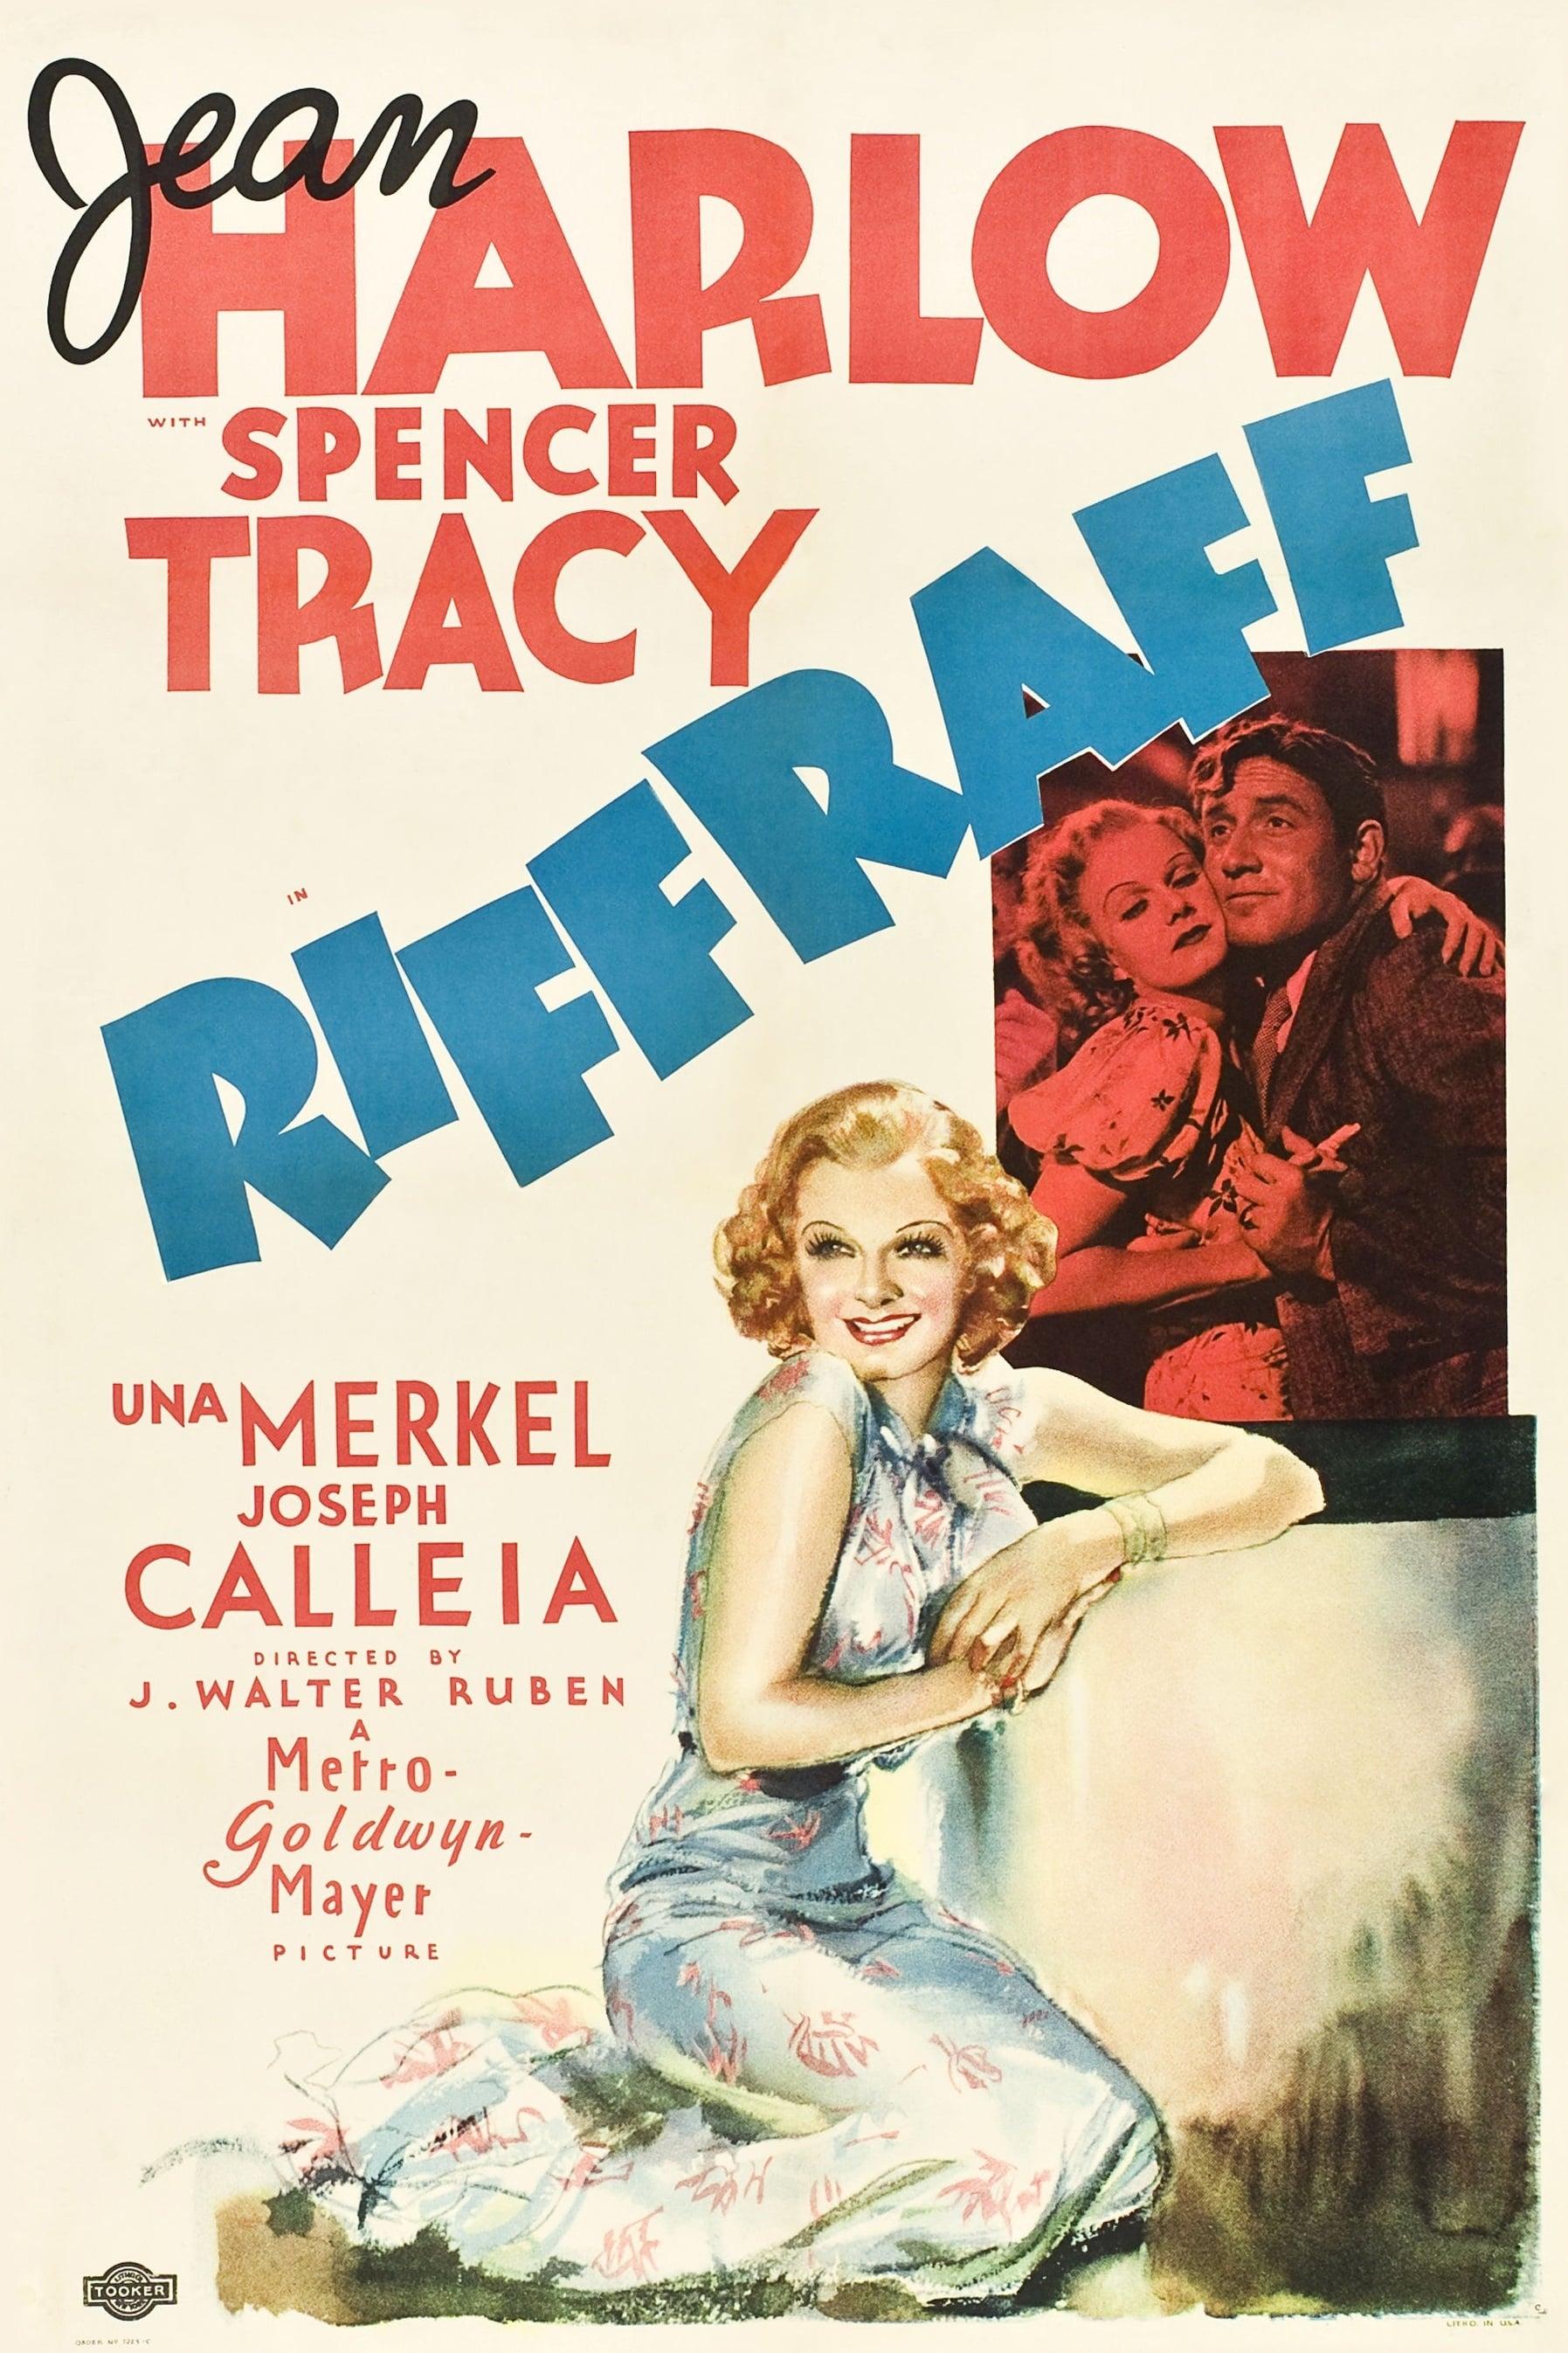 Riffraff poster